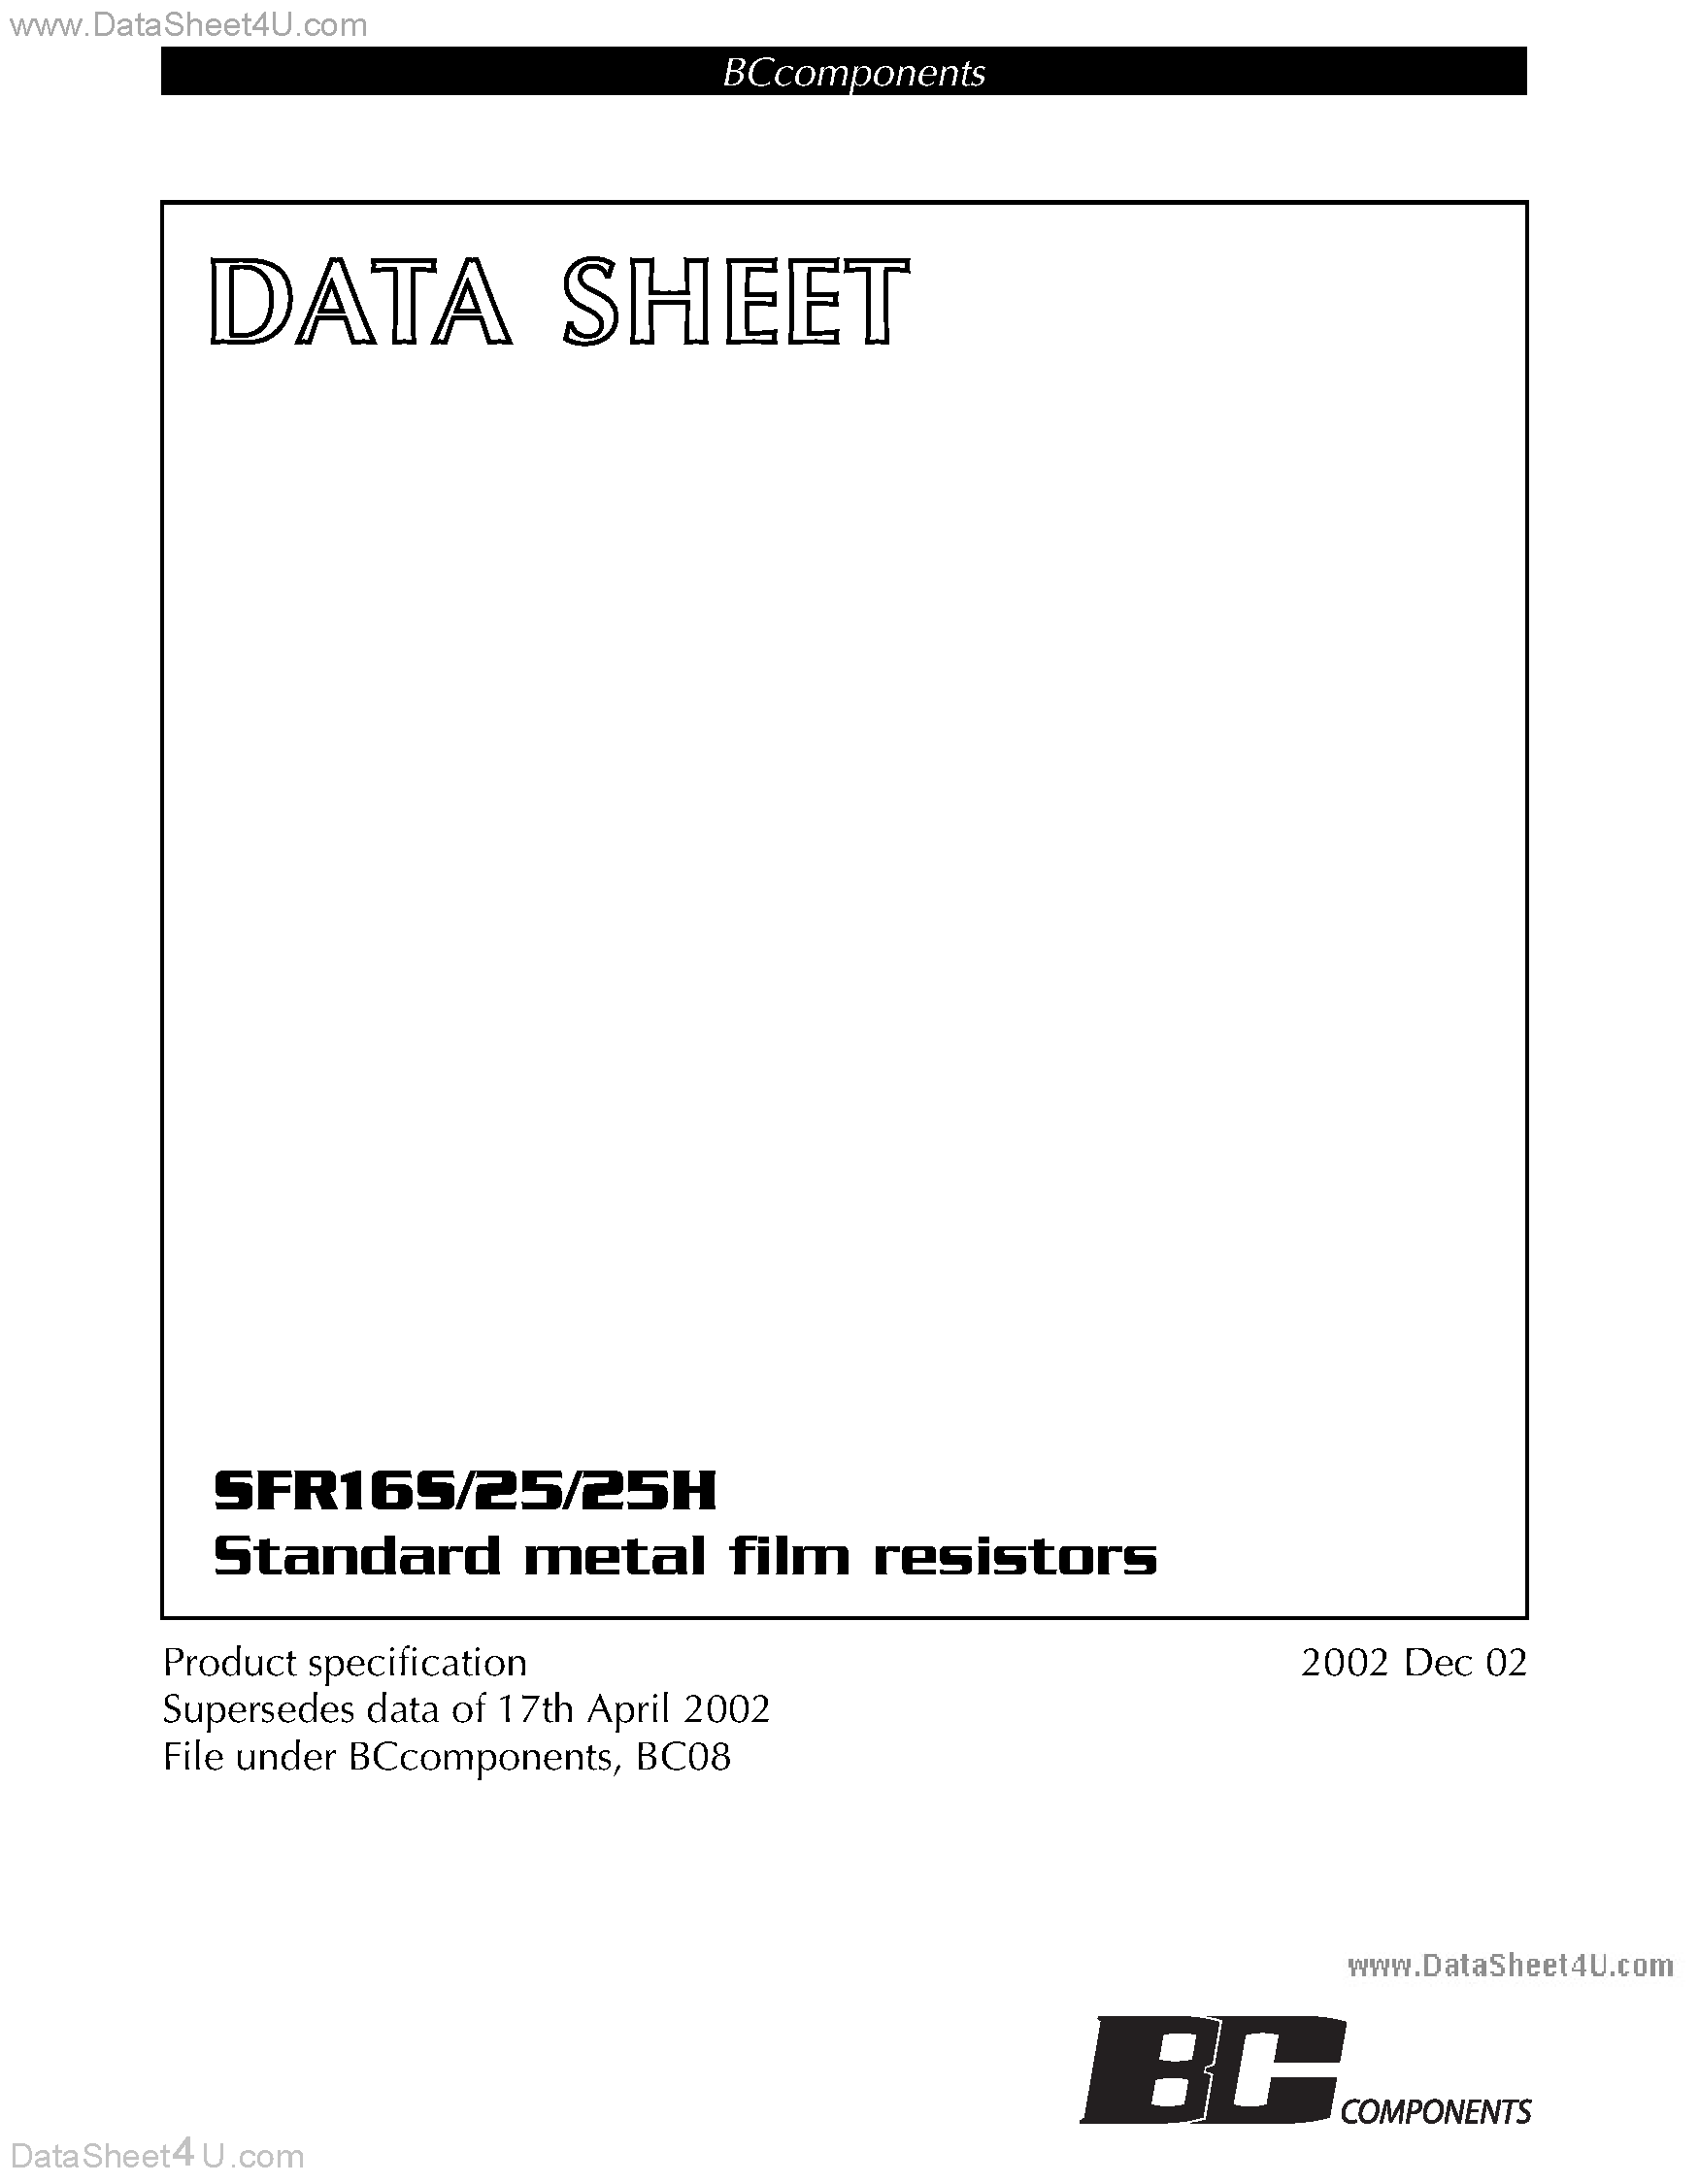 Даташит SFR16S - (SFR16S/25) Standard metal film resistors страница 1